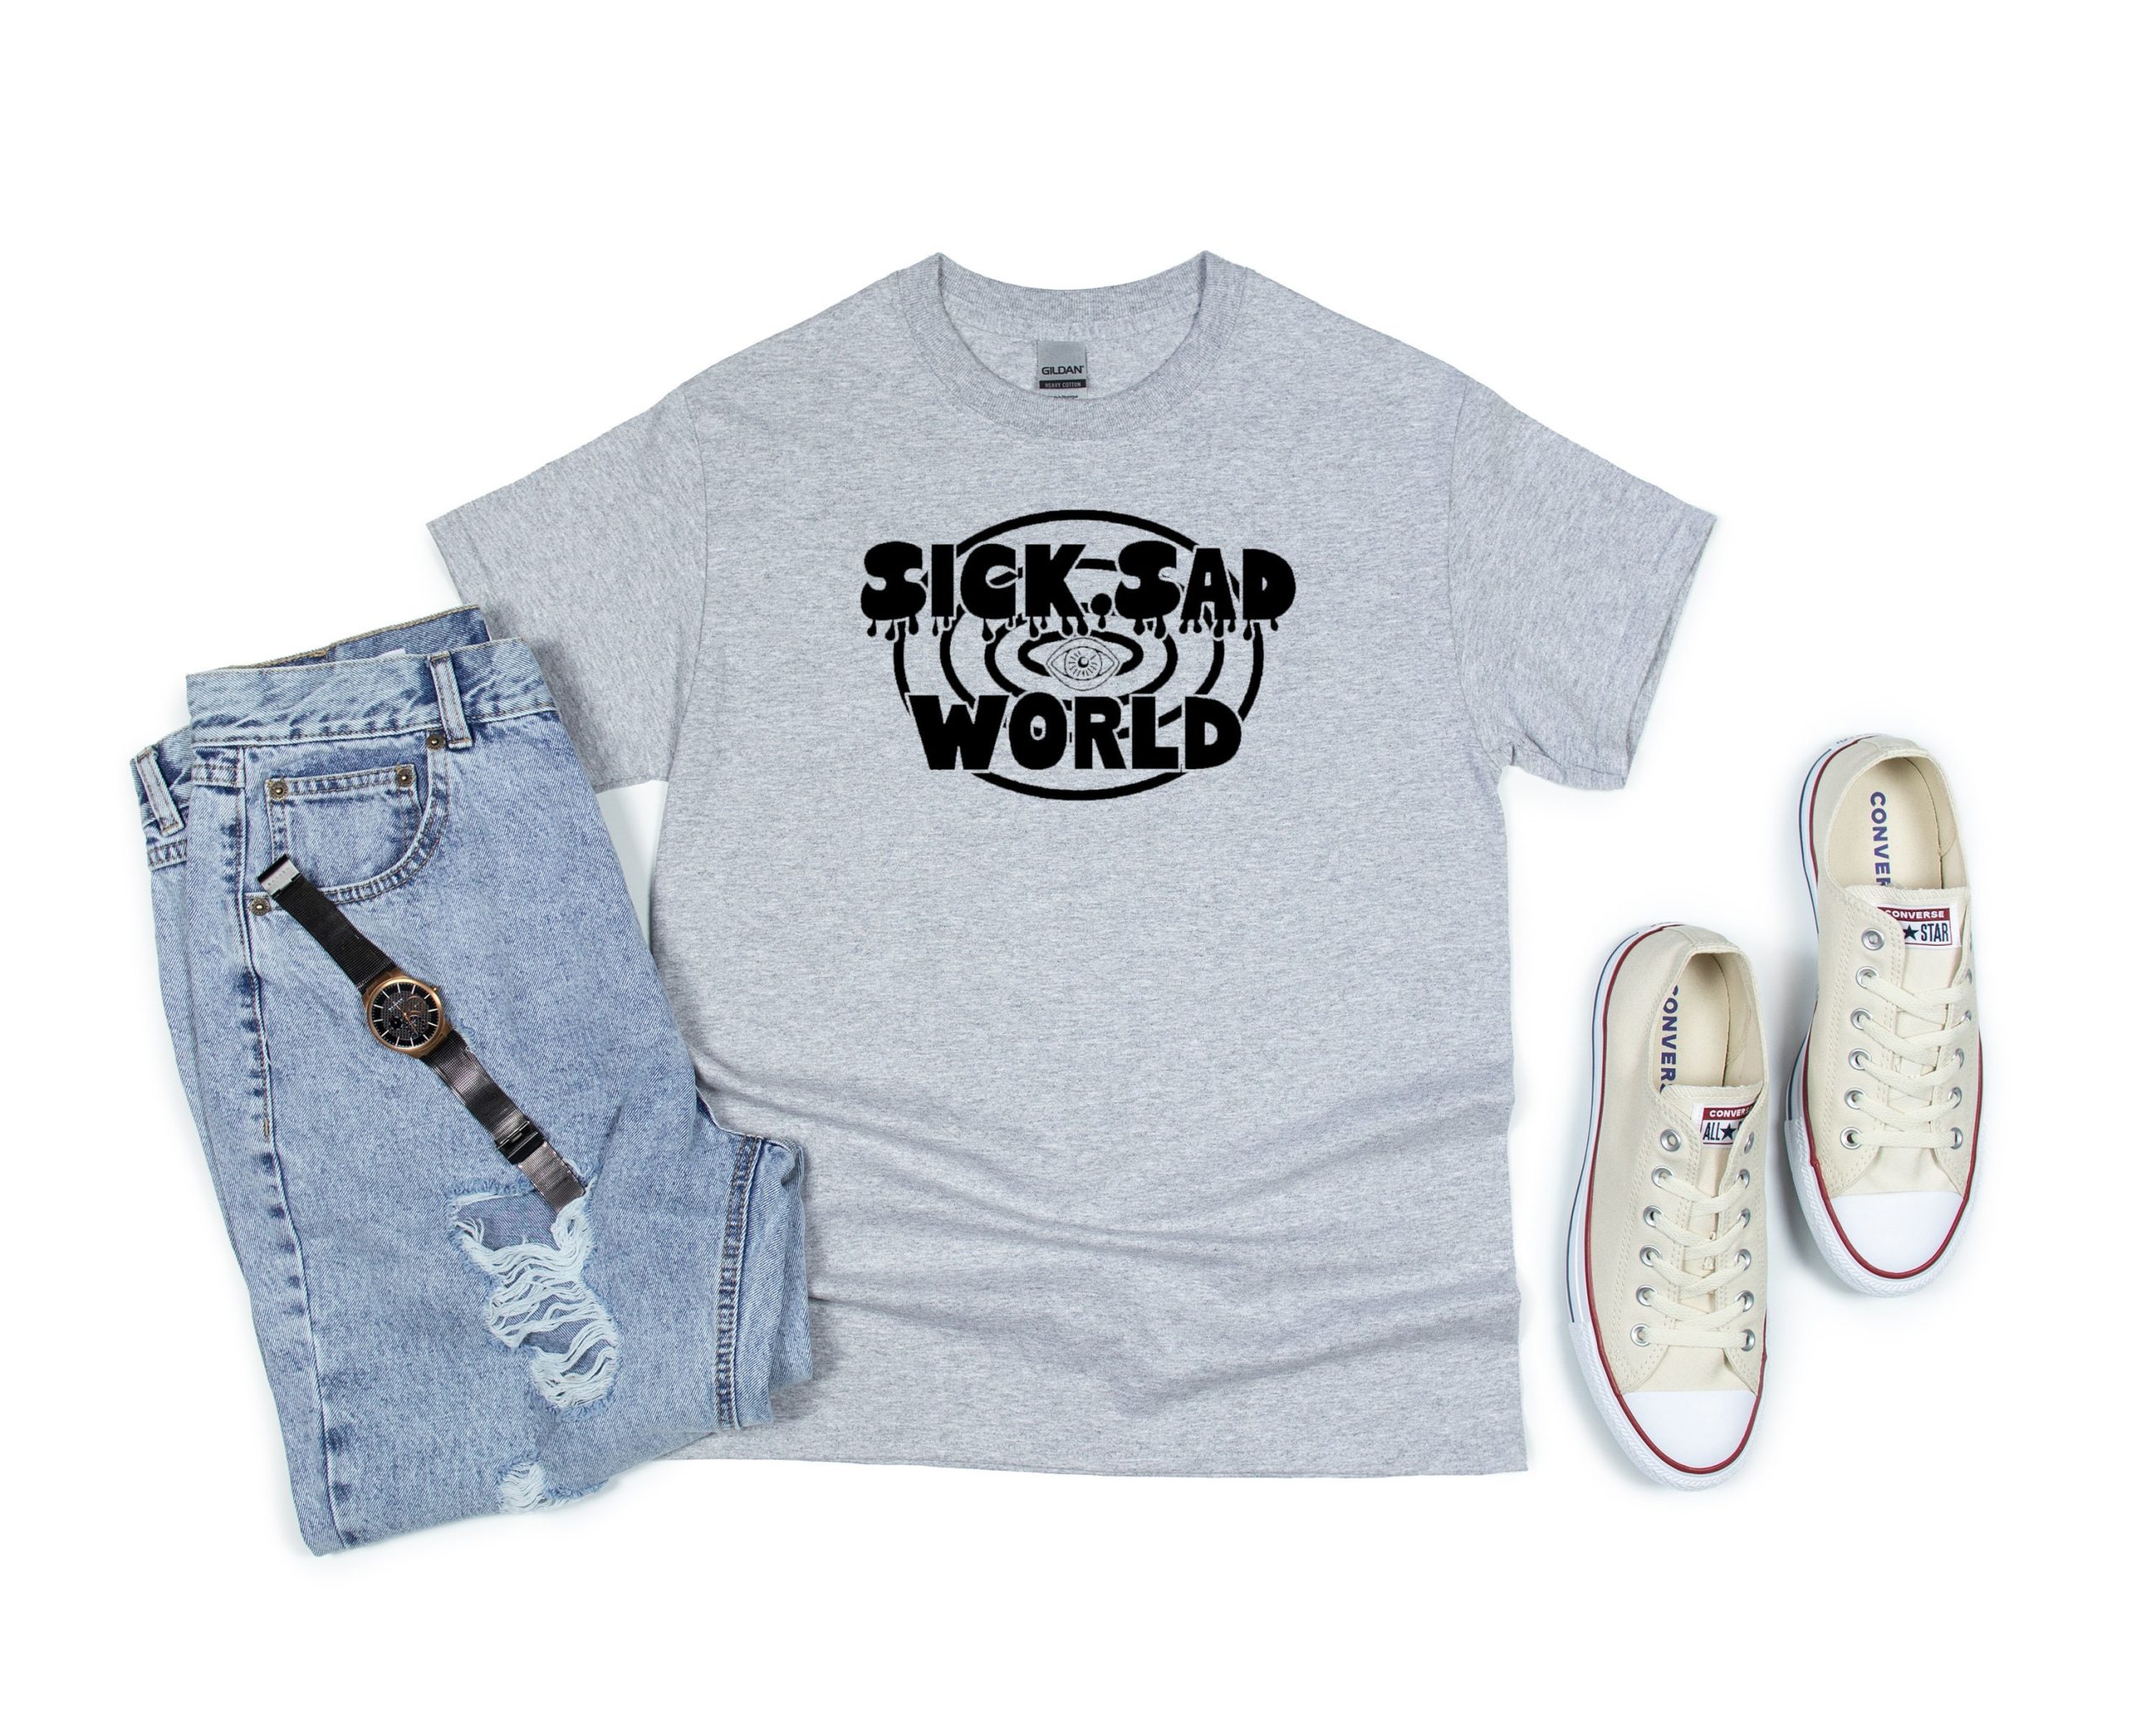 Sick Sad World Daria Morgendorffer 90's Nostalgia Grunge Popular Unisex T-Shirt